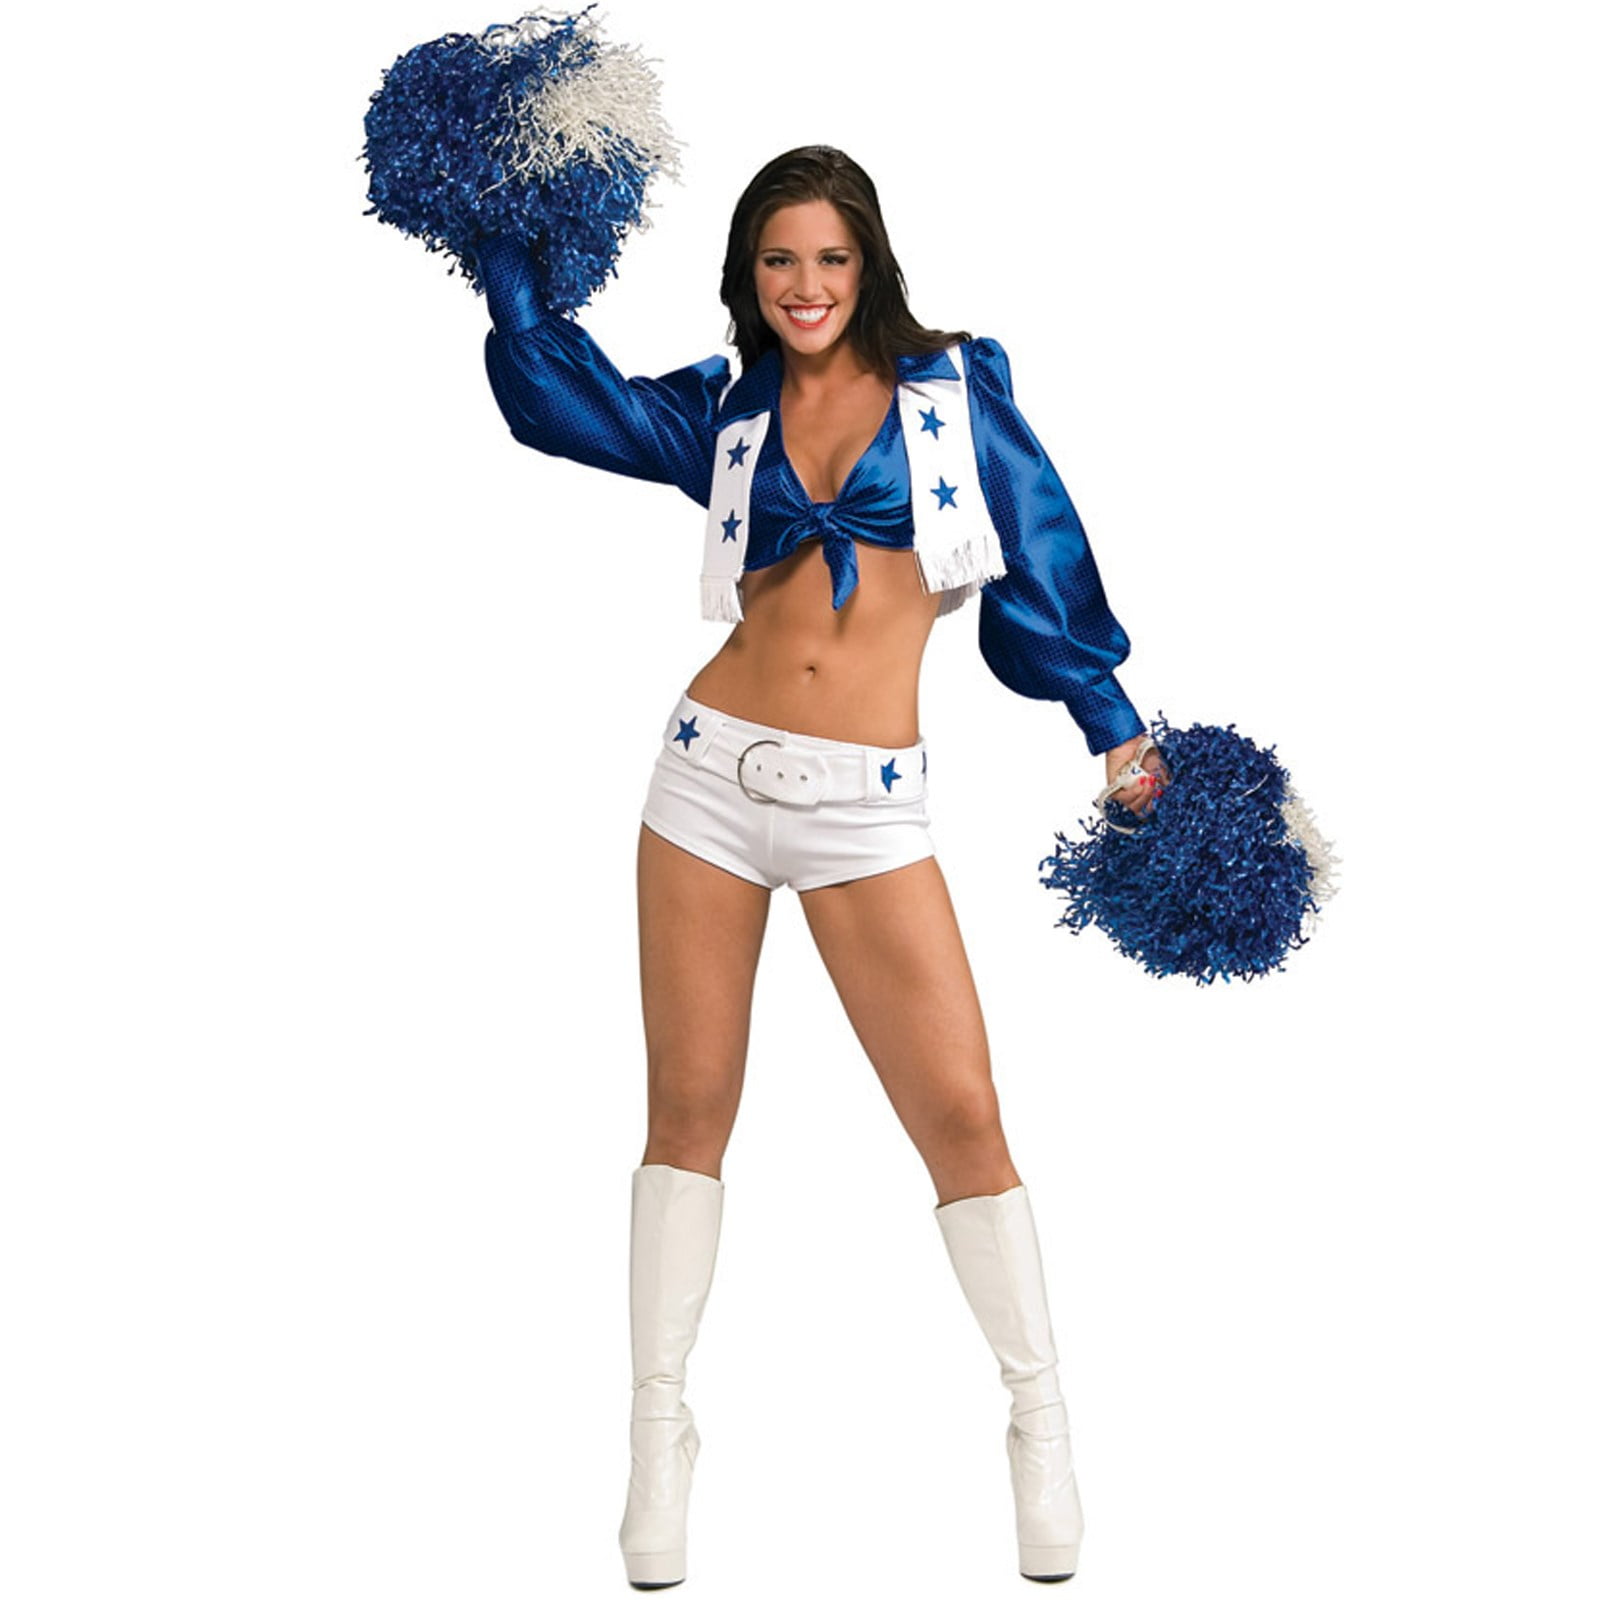 Licensed Deluxe Dallas Cowboys Cheerleader Costume for Women